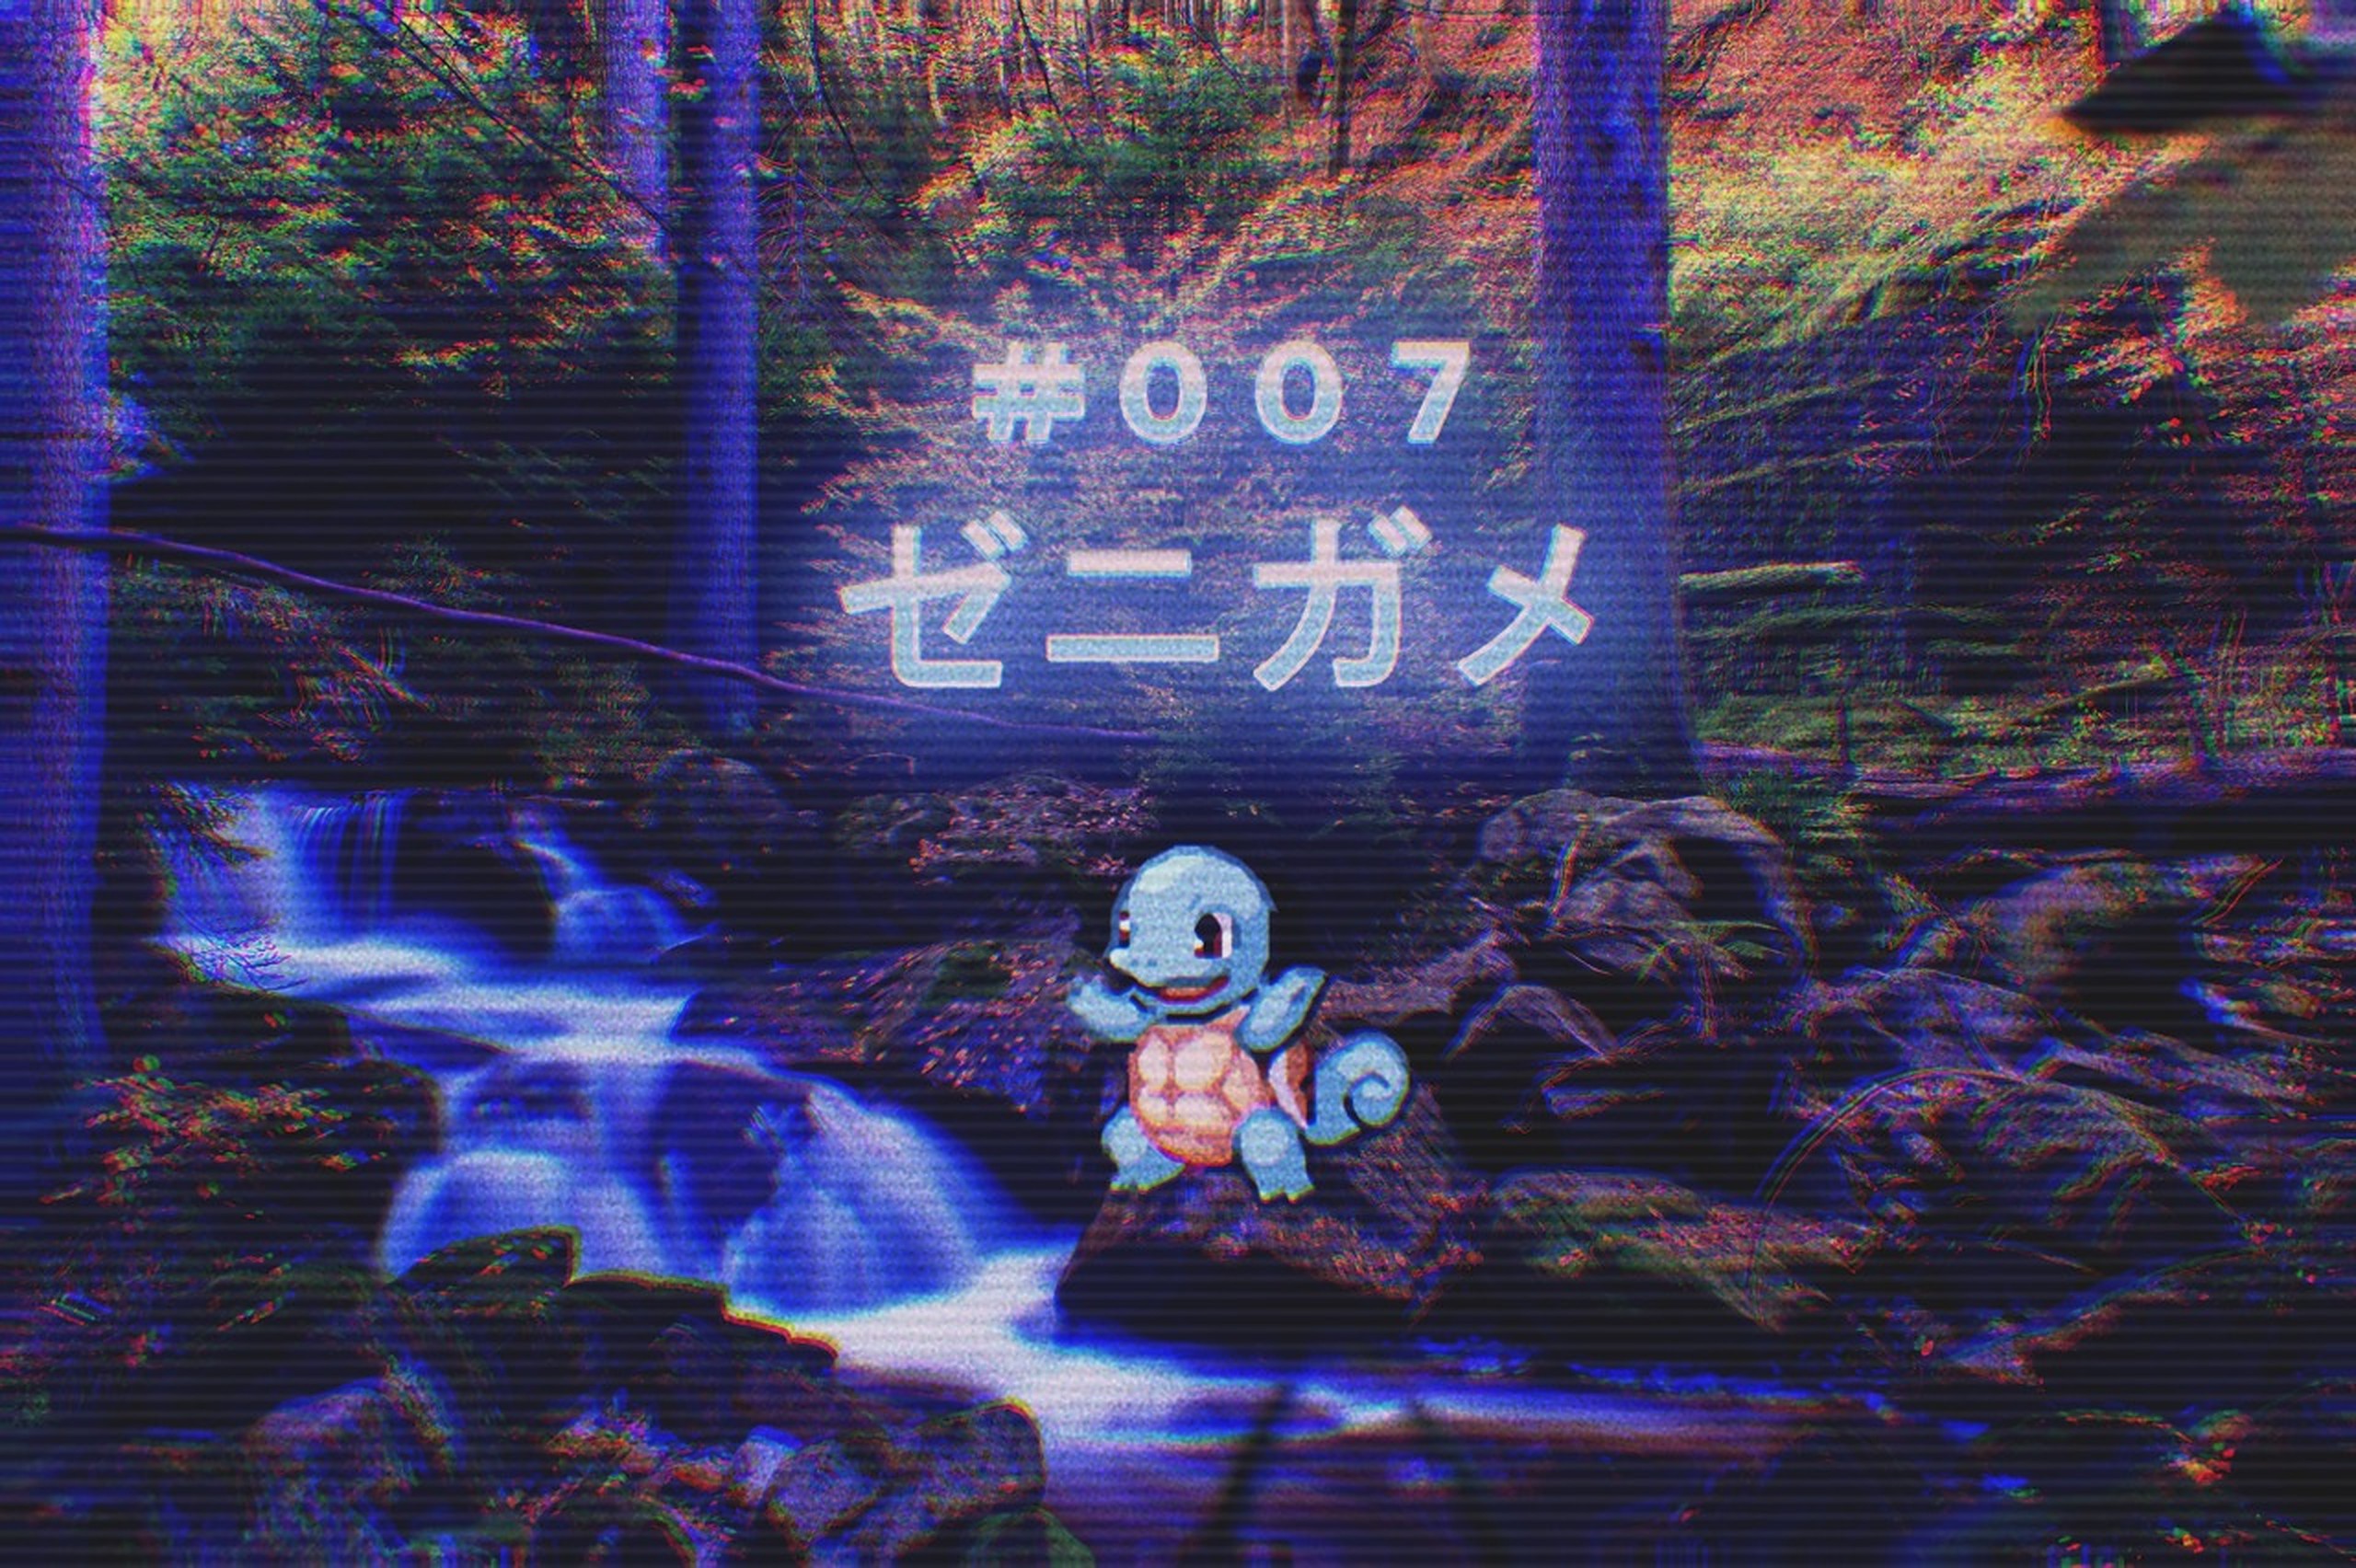 Anime 2560x1704 Pokémon Squirtle Zenigame vaporwave river forest landscape nature Nintendo Pokémon First Generation water anime